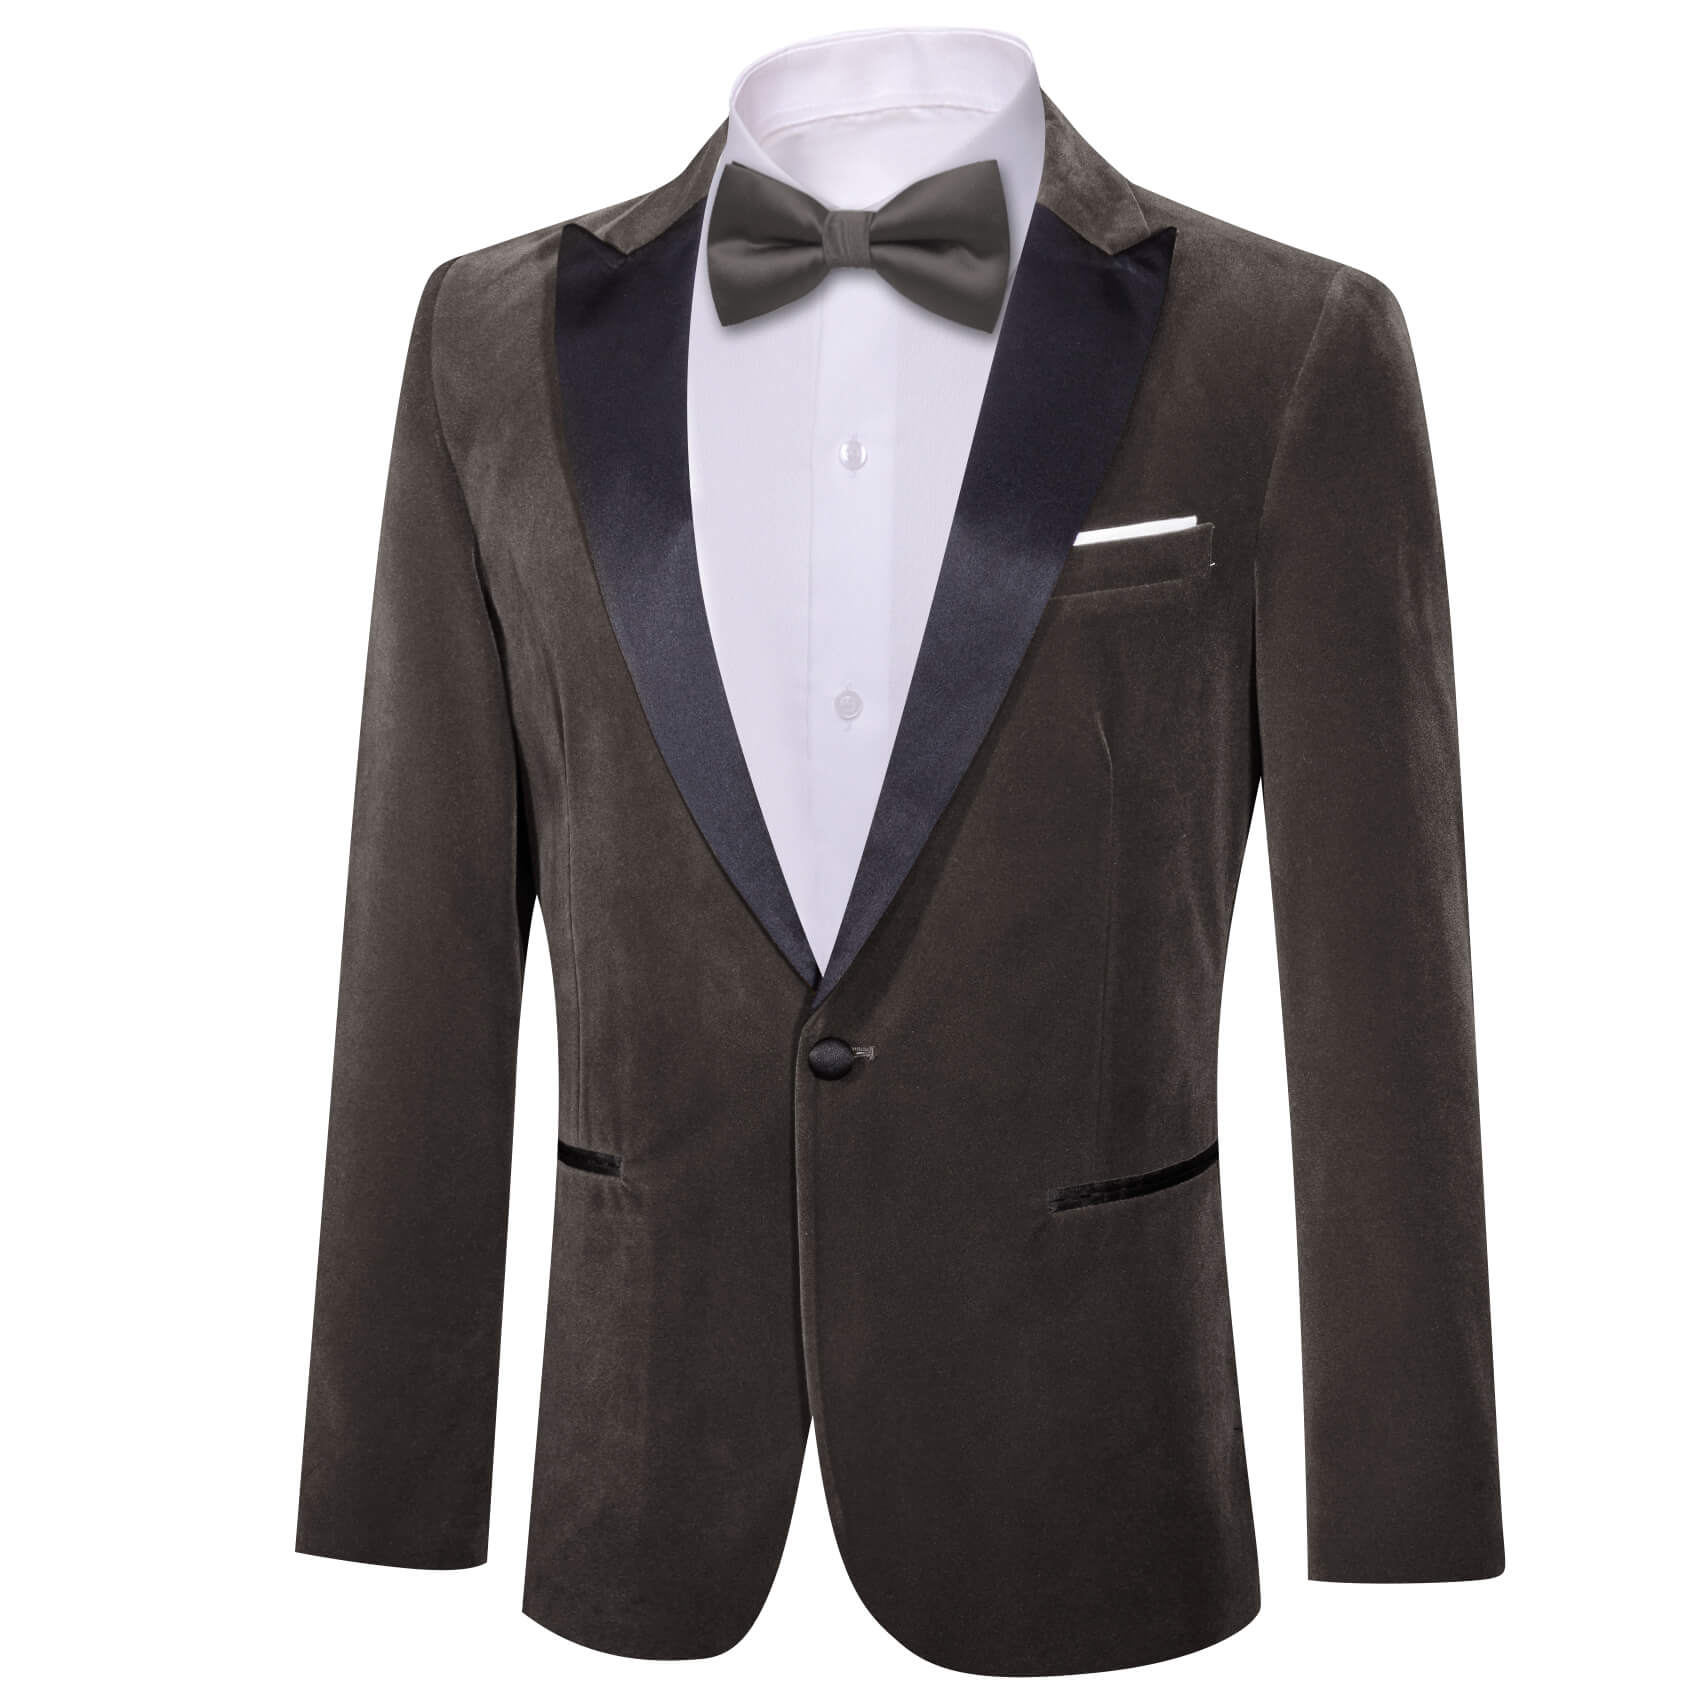 Barry.wang Men's Suit Ash Grey Solid Slim Silk Peak Collar Suit Business